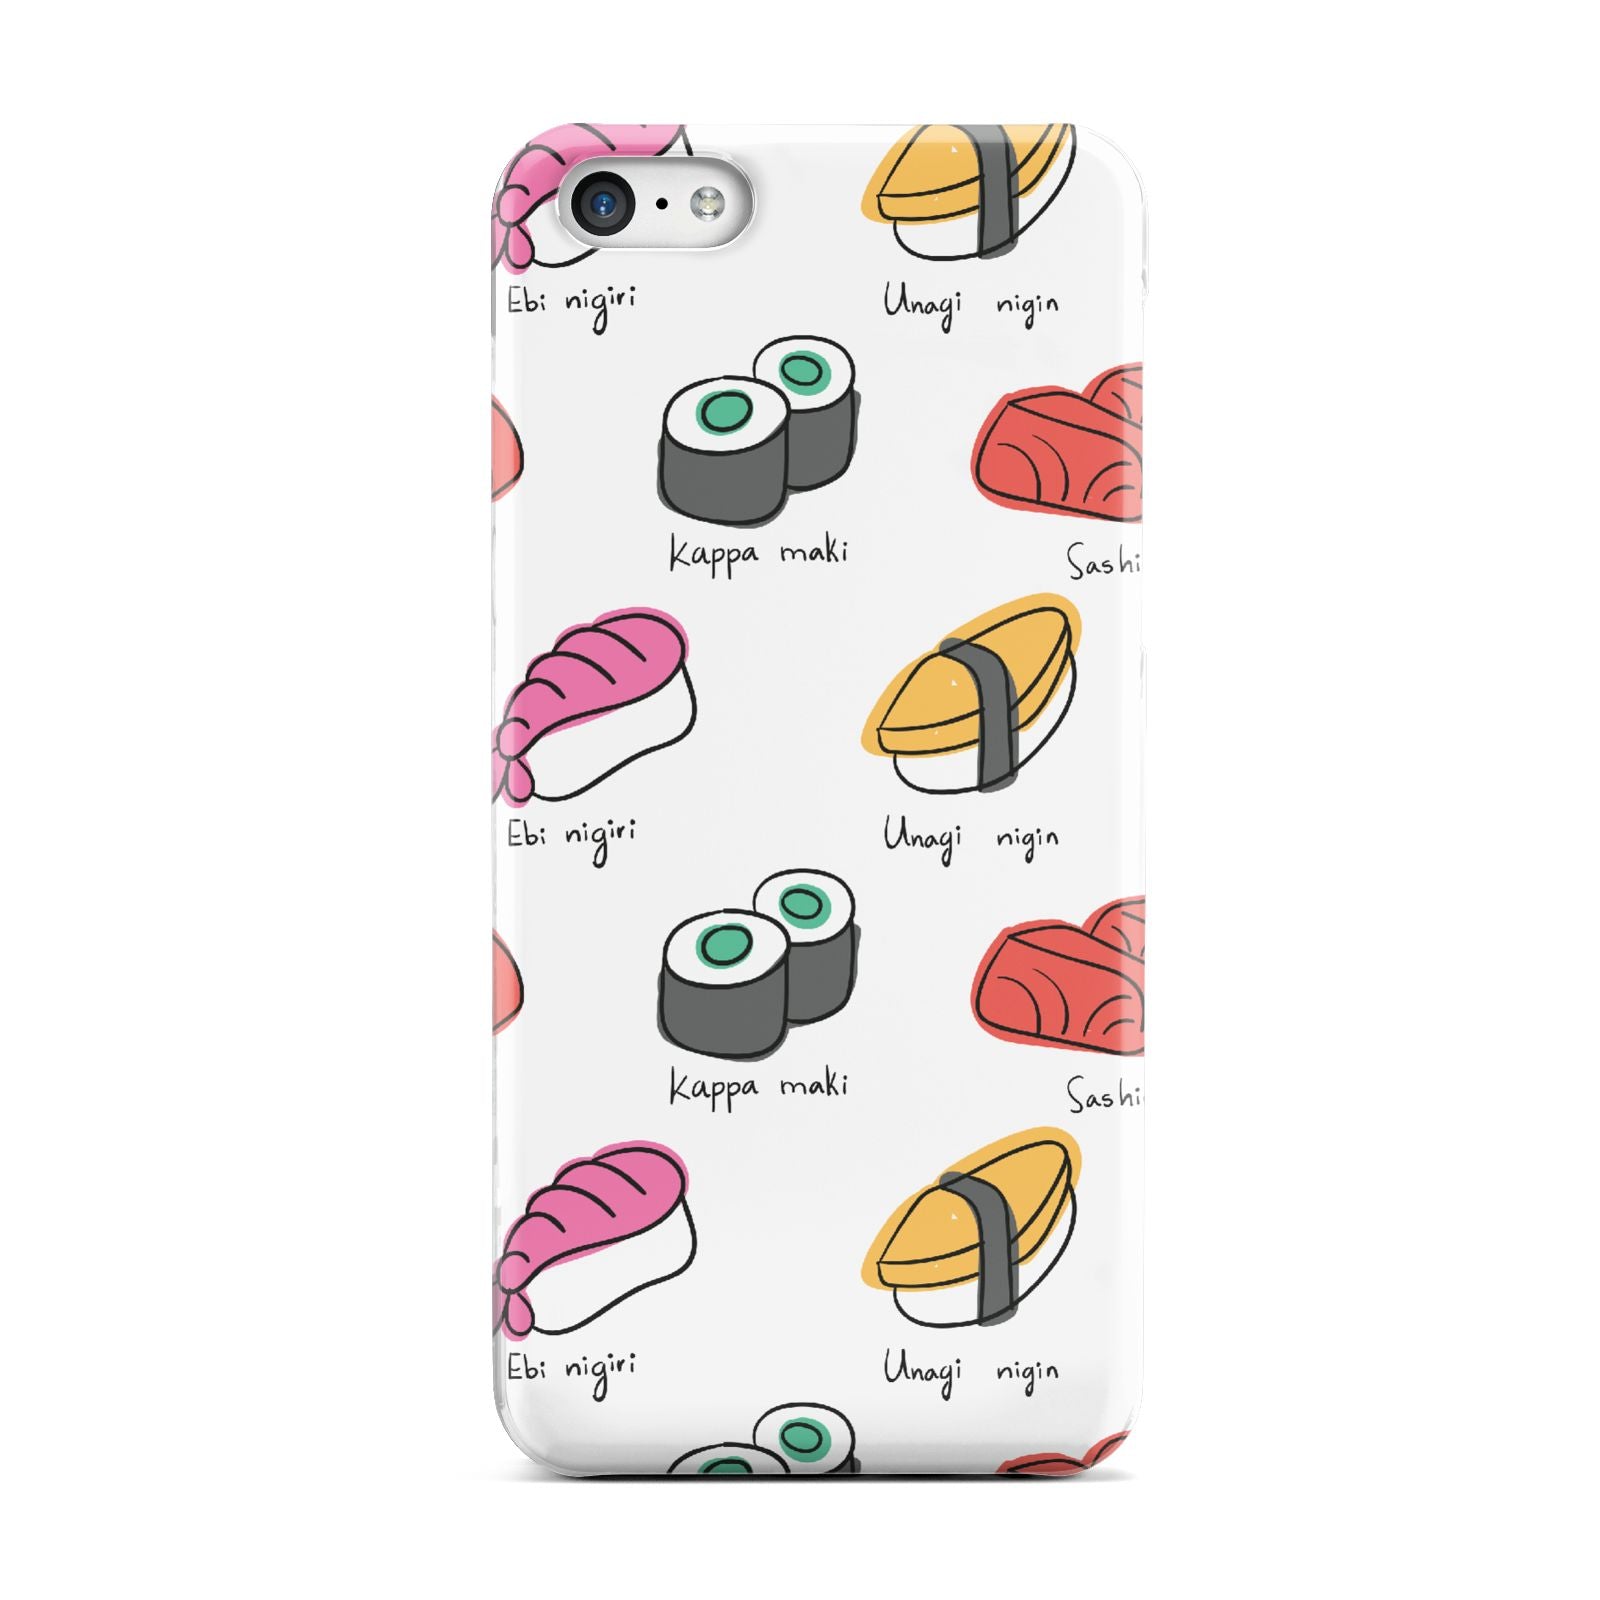 Sashimi Kappa Maki Sushi Apple iPhone 5c Case